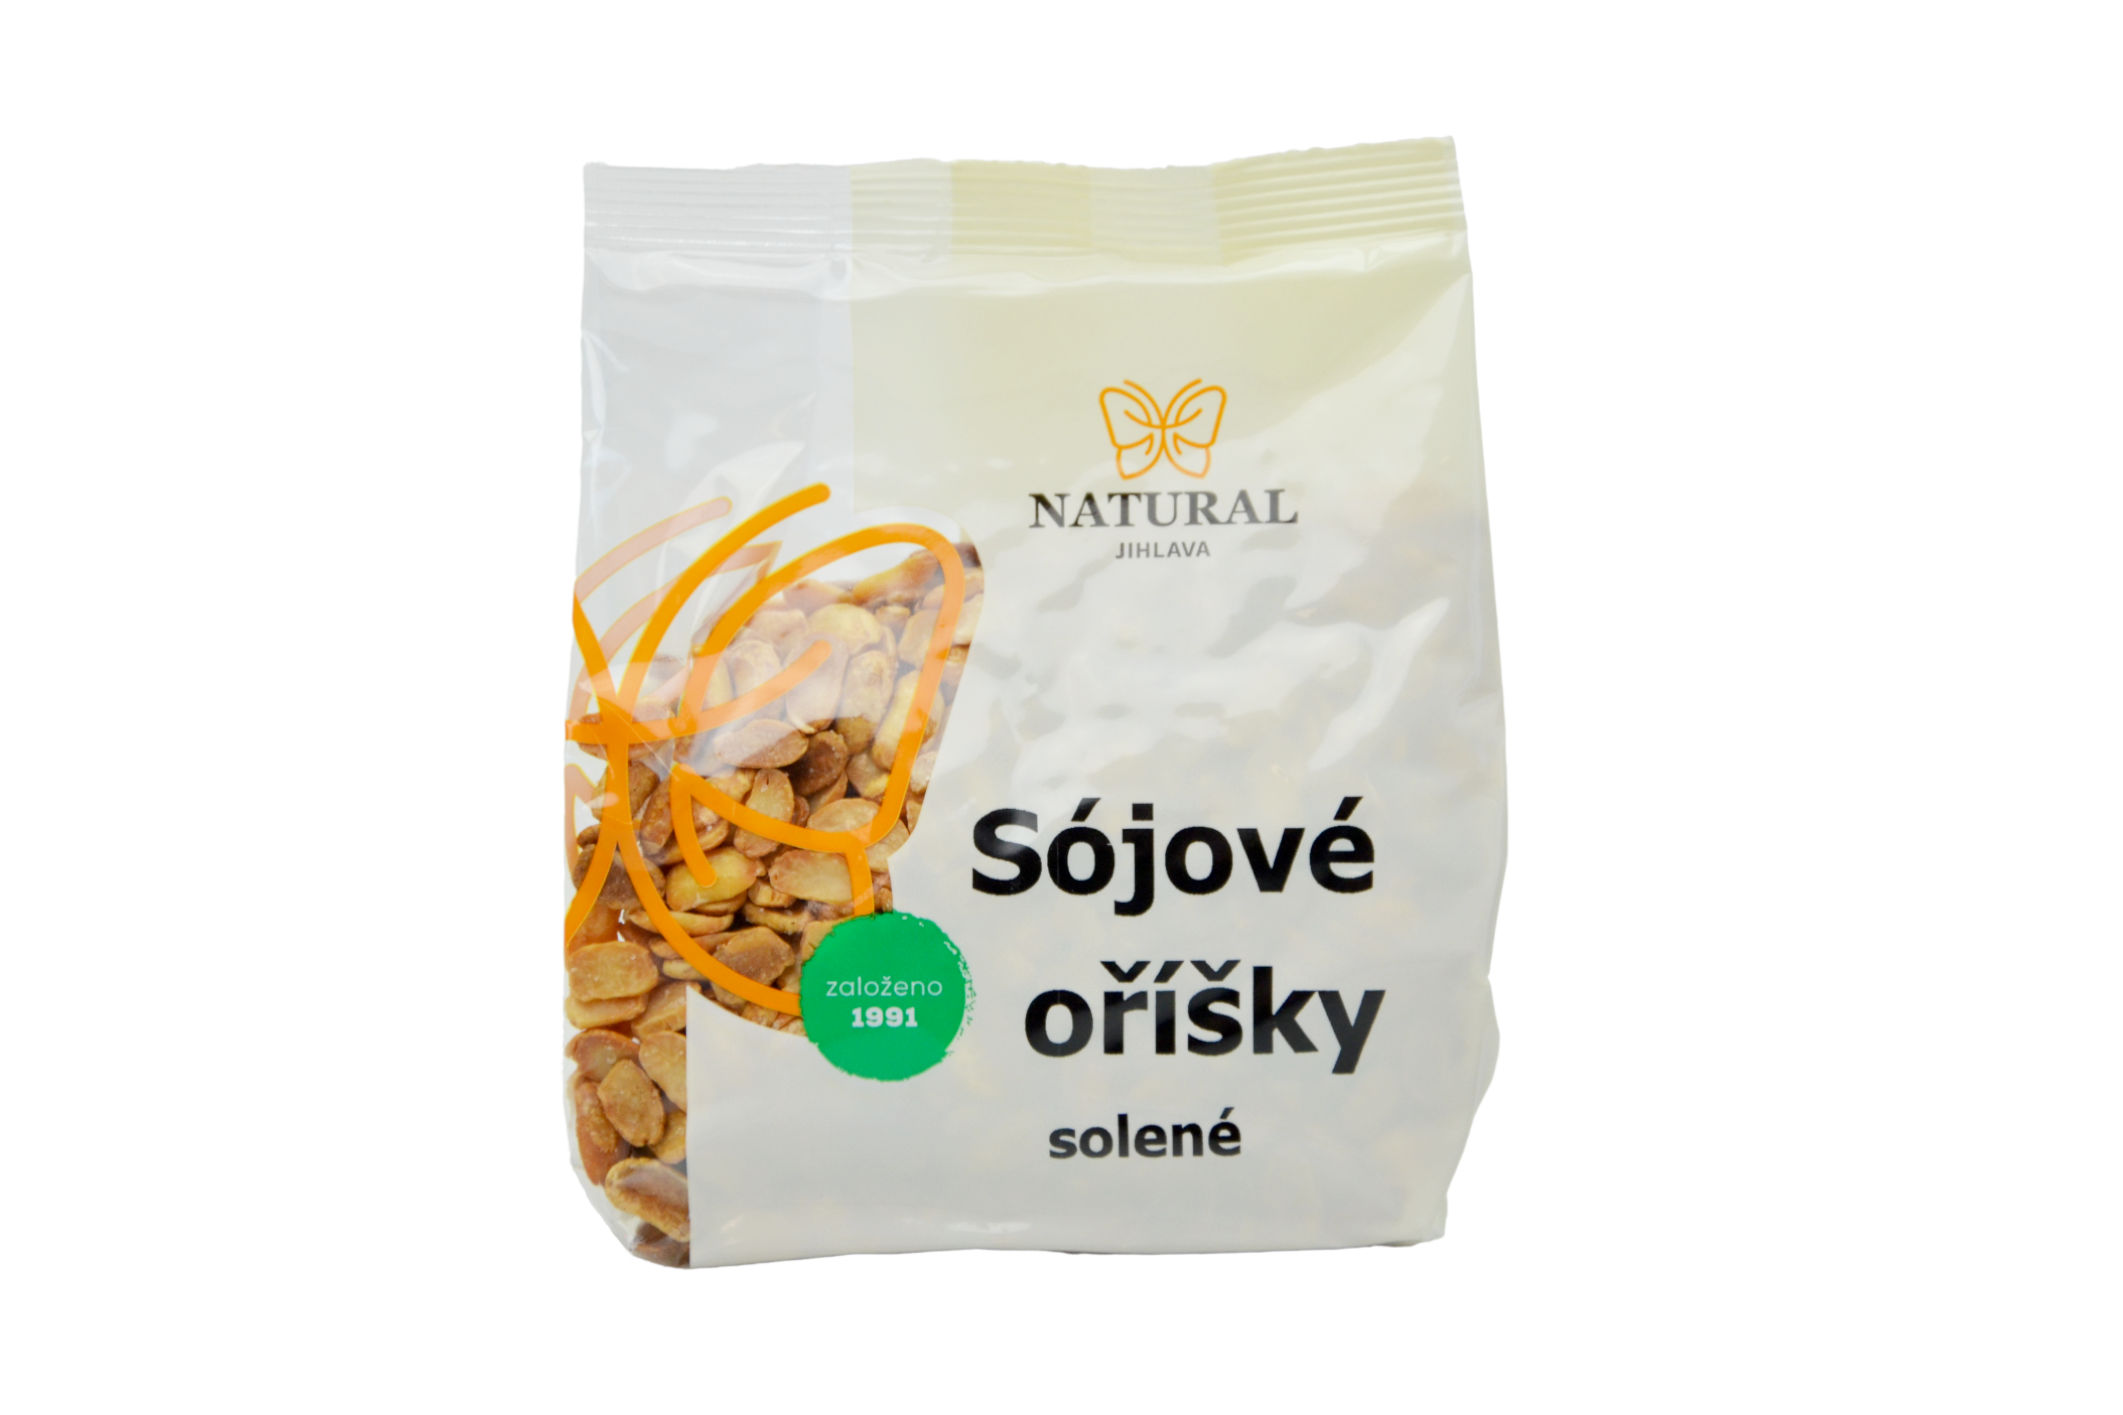 Natural Jihlava Oříšky sójové pražené solené - Natural 150g 40 ks